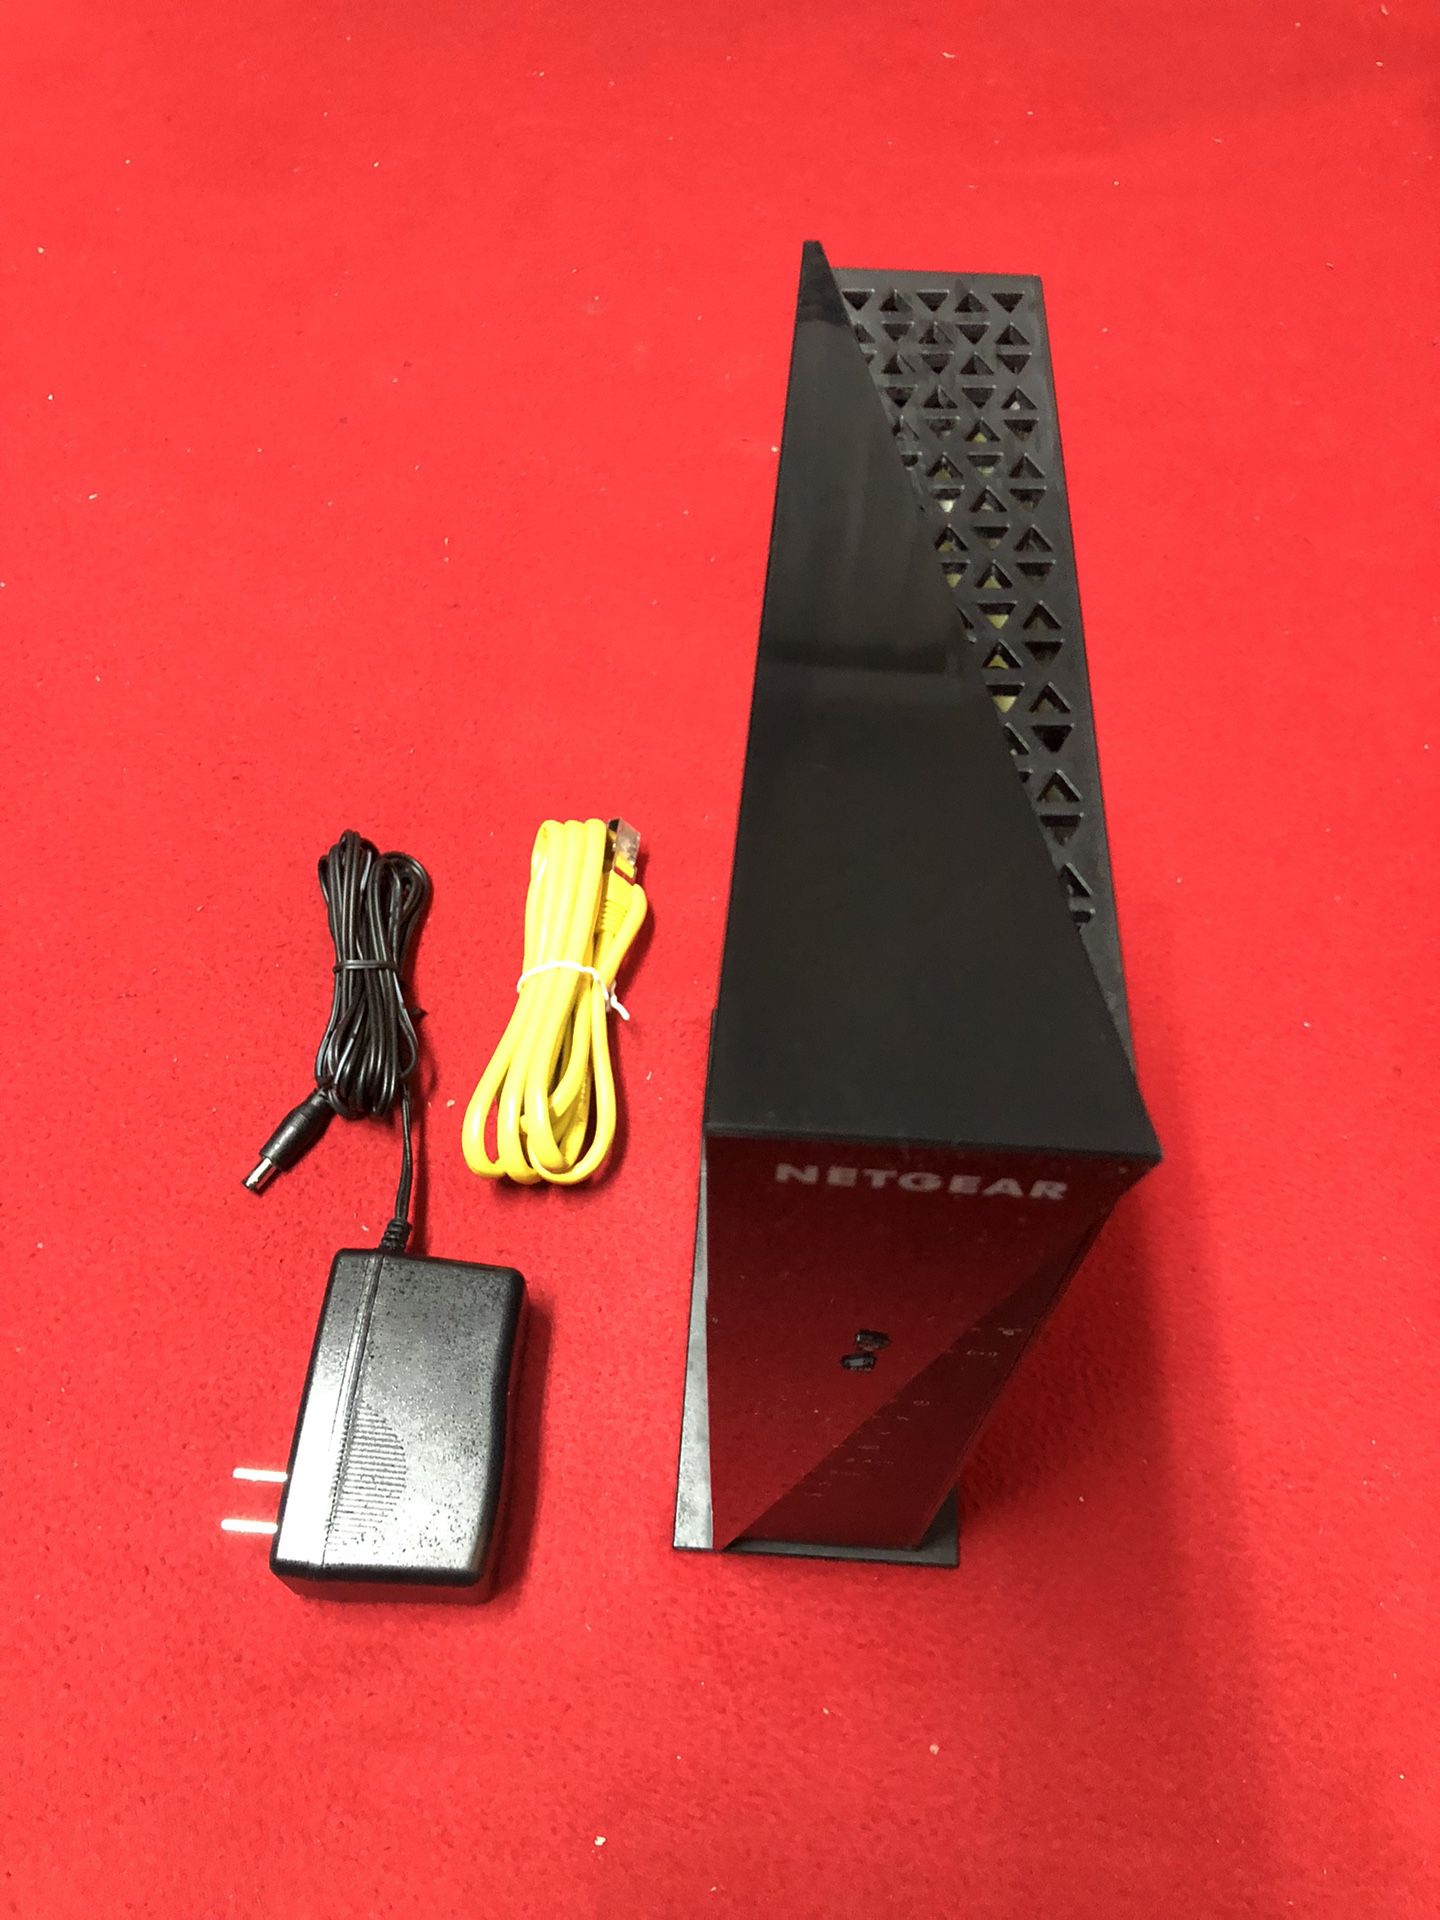 Netgear C6300 Wi-Fi Cable Modem Router Combo